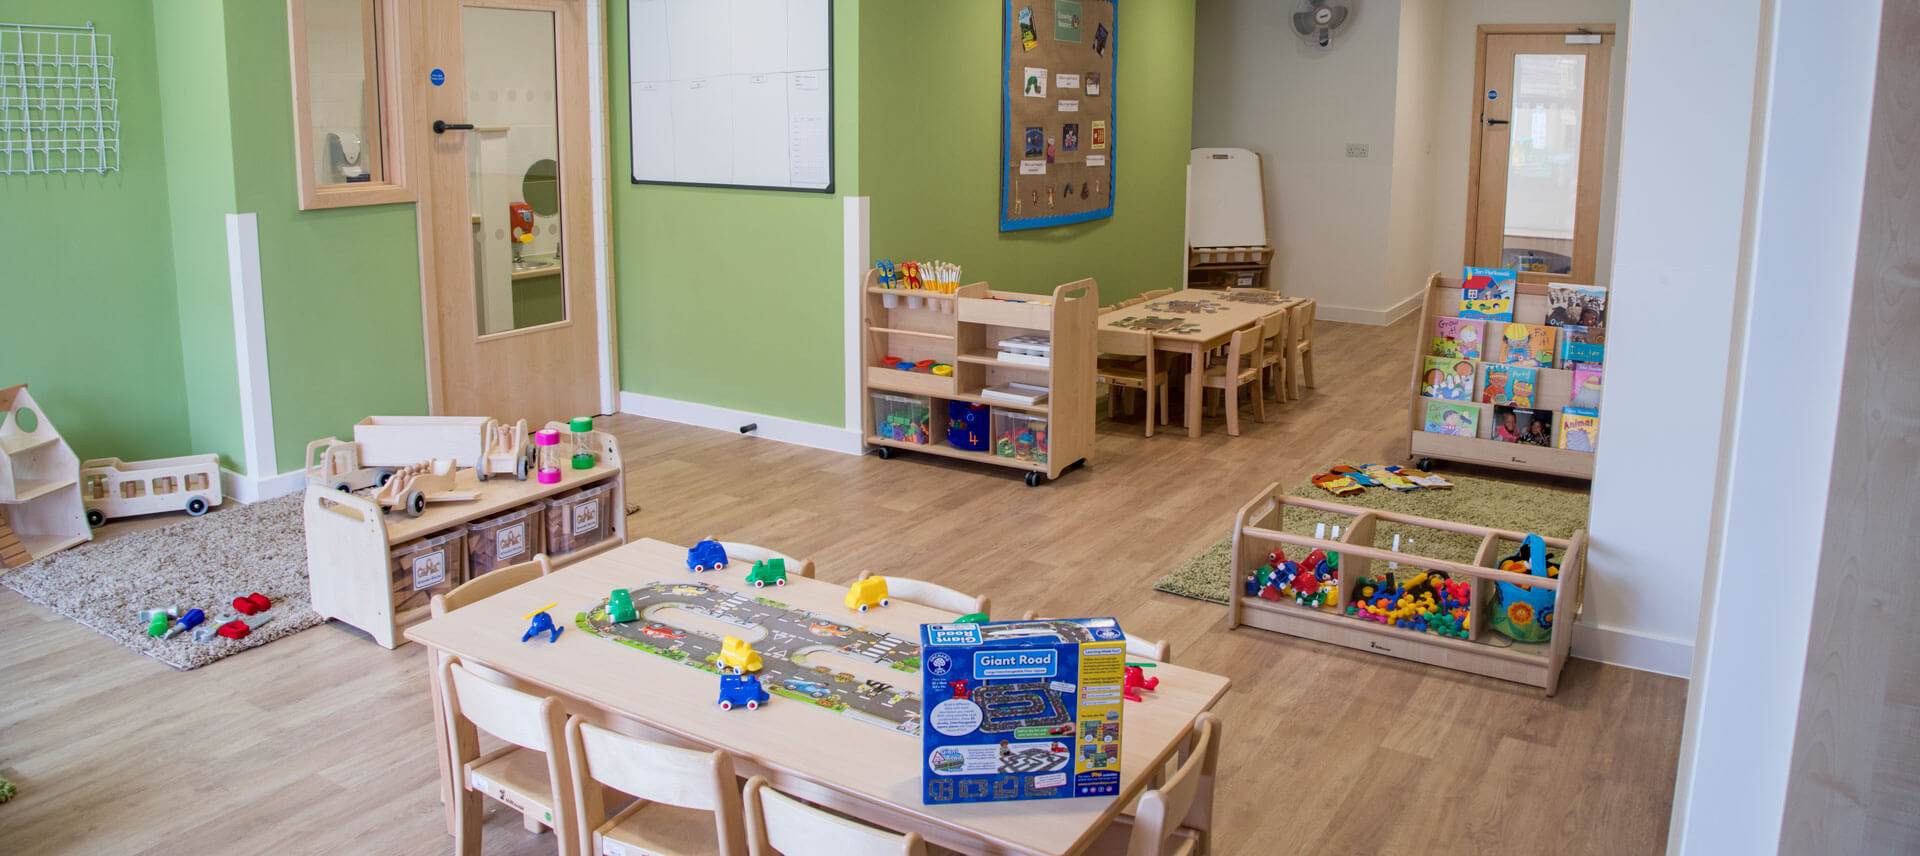 Didcot Day Nursery and Preschool